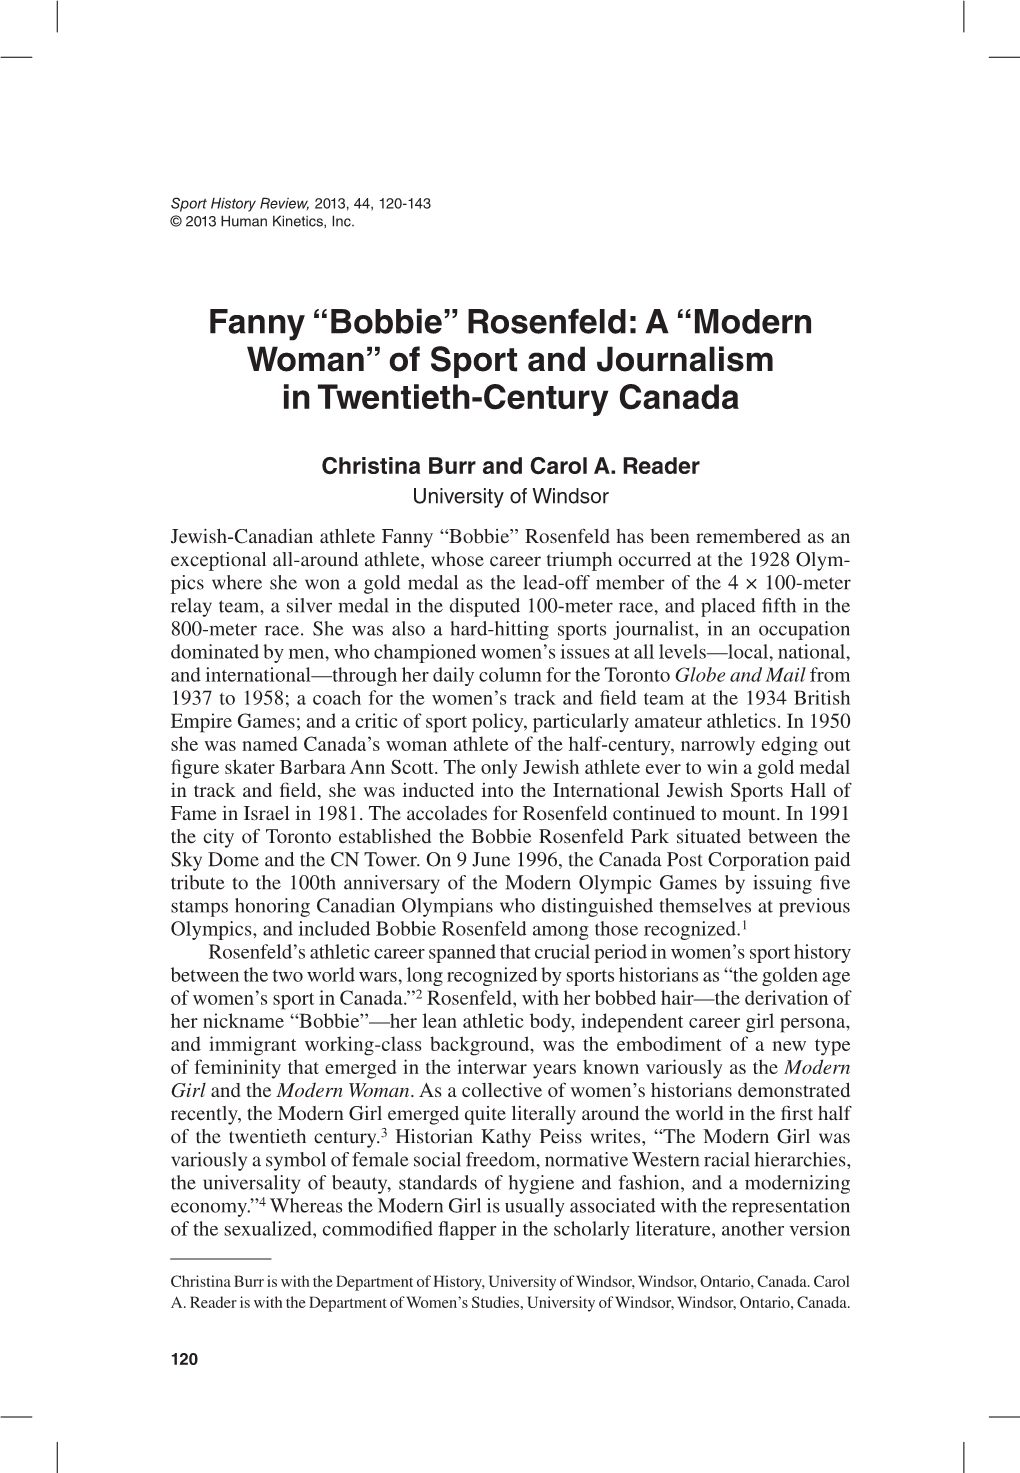 “Bobbie” Rosenfeld: a “Modern Woman” of Sport and Journalism in Twentieth-Century Canada